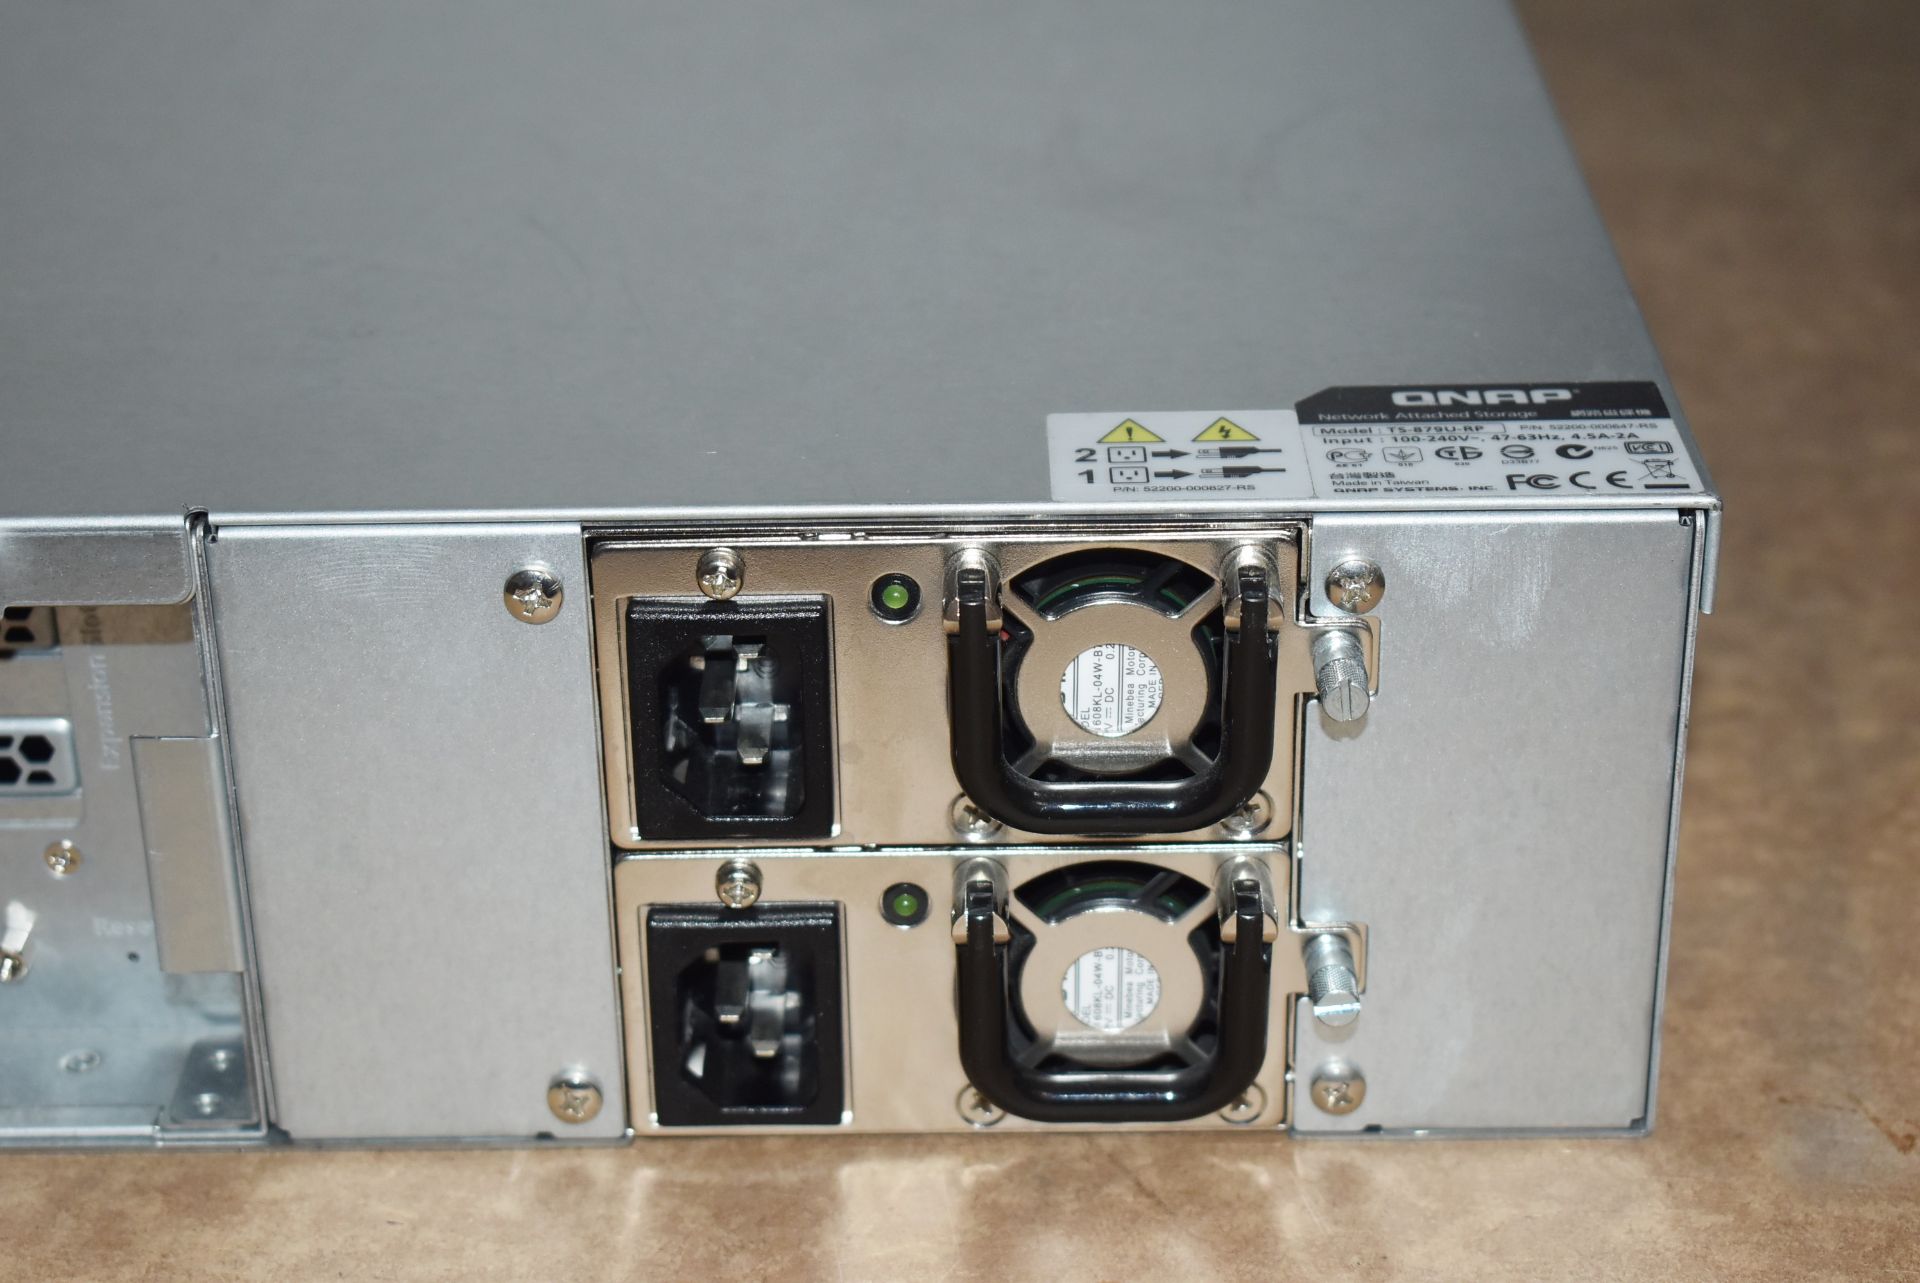 1 x QNAP 8 Bay 2u NAS Storage Device - Model TS-879U-RP - RRP £1,500 - Ref: MPC176 CA - CL678 - - Image 7 of 11